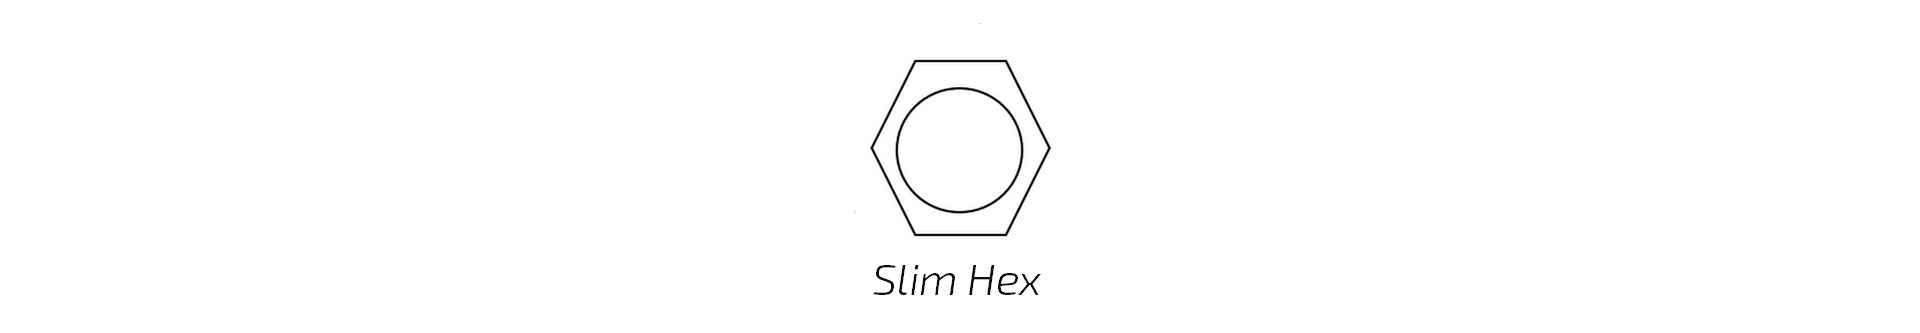 Slim Hex